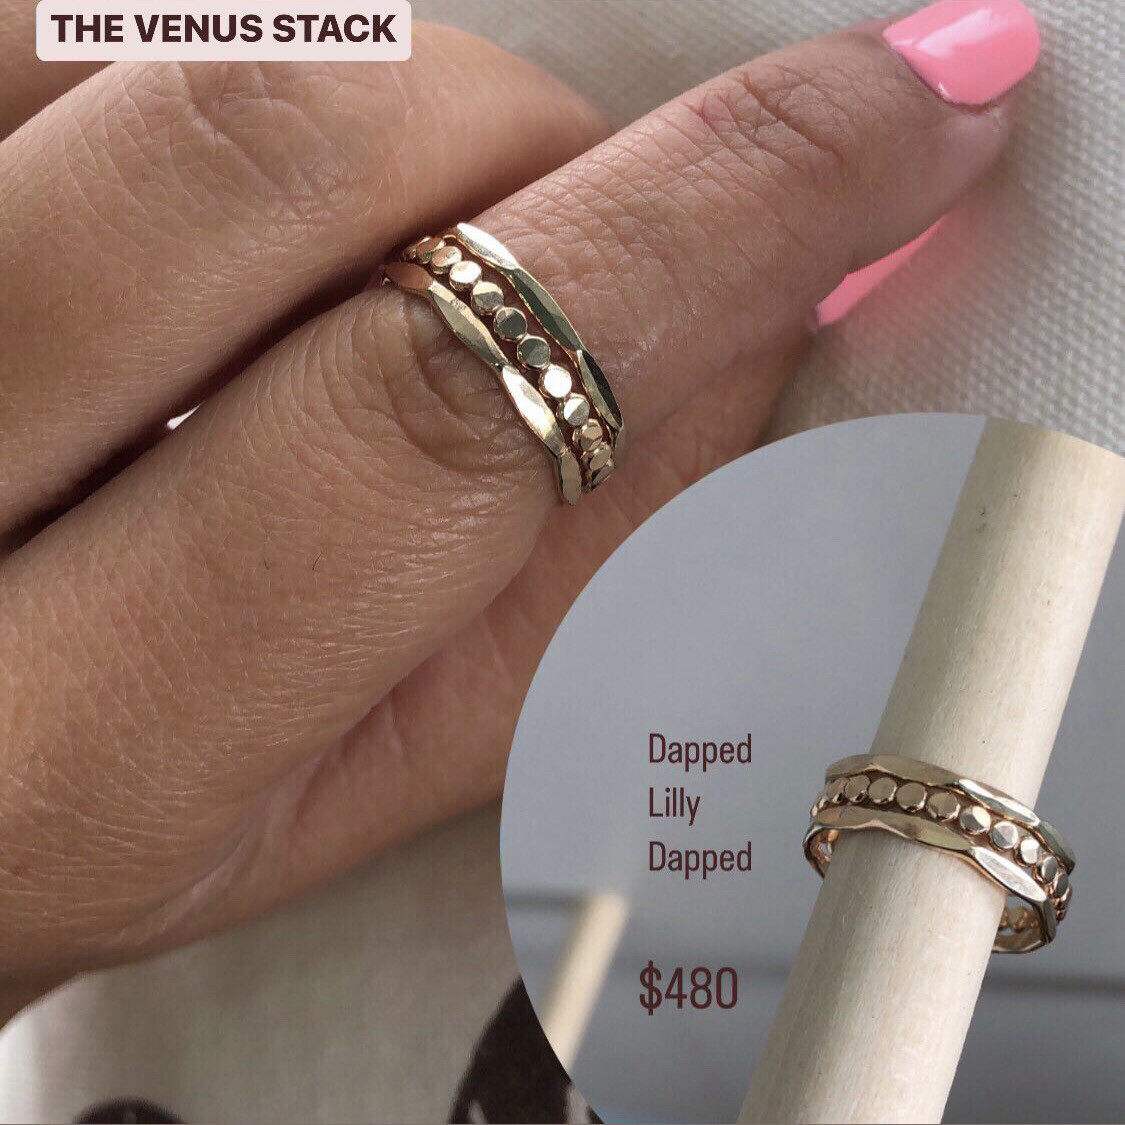 The Venus Stack